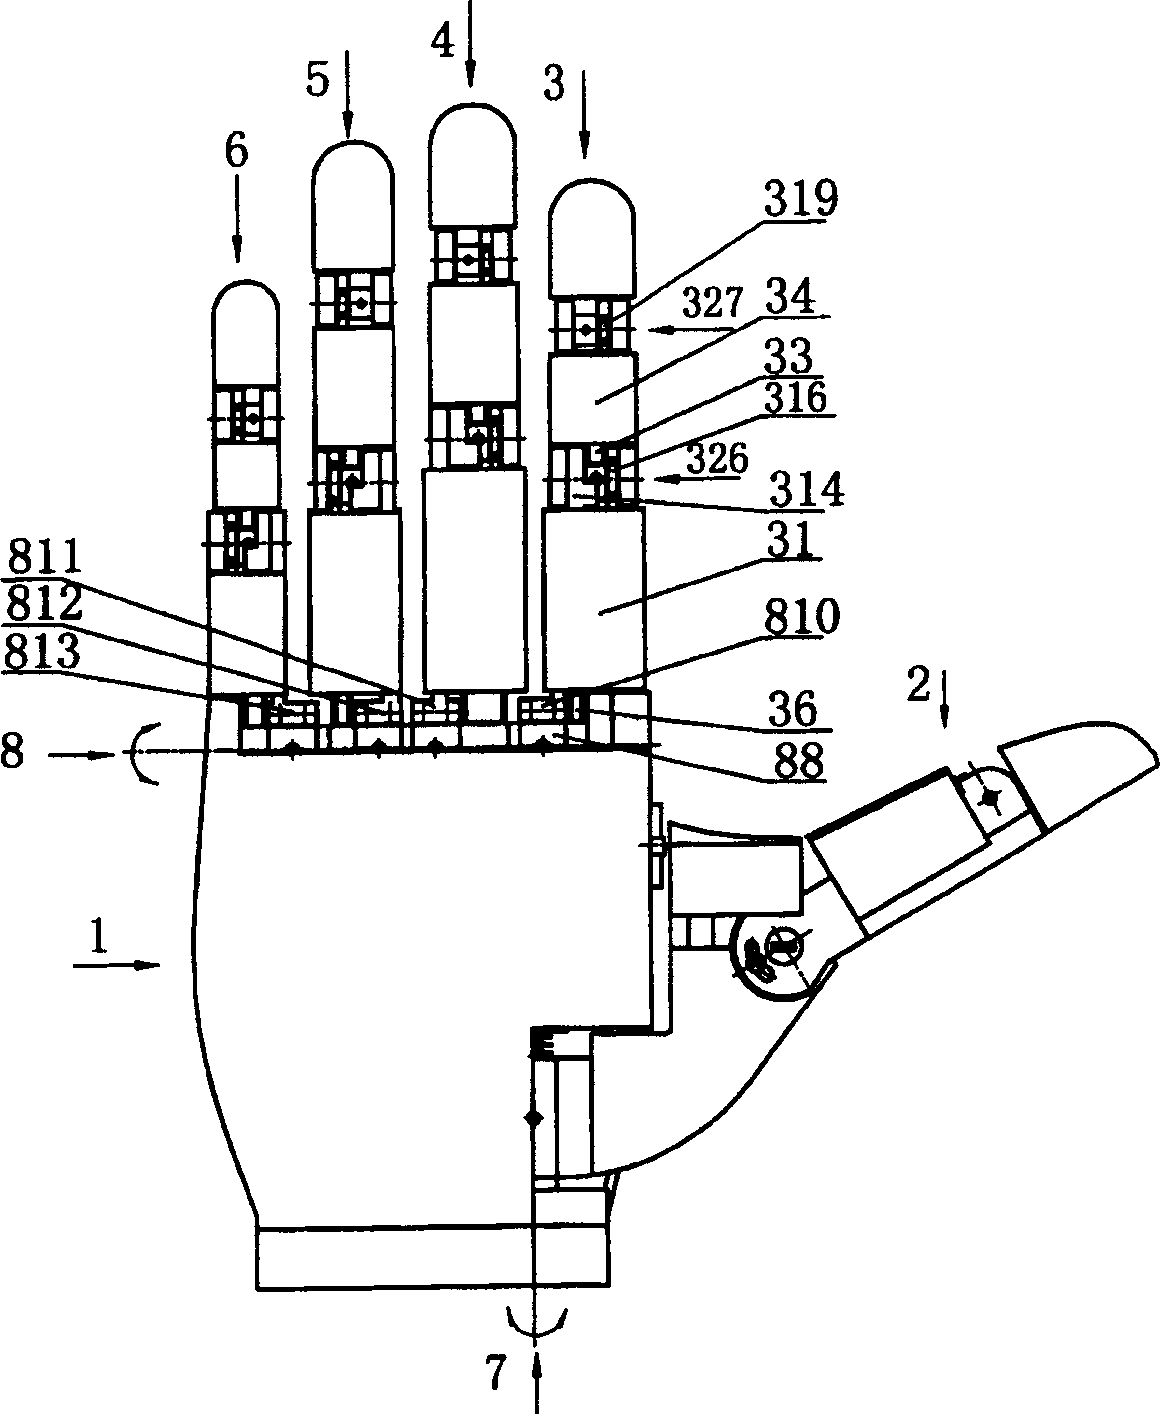 Robot anthropomorphic multi- finger hand device